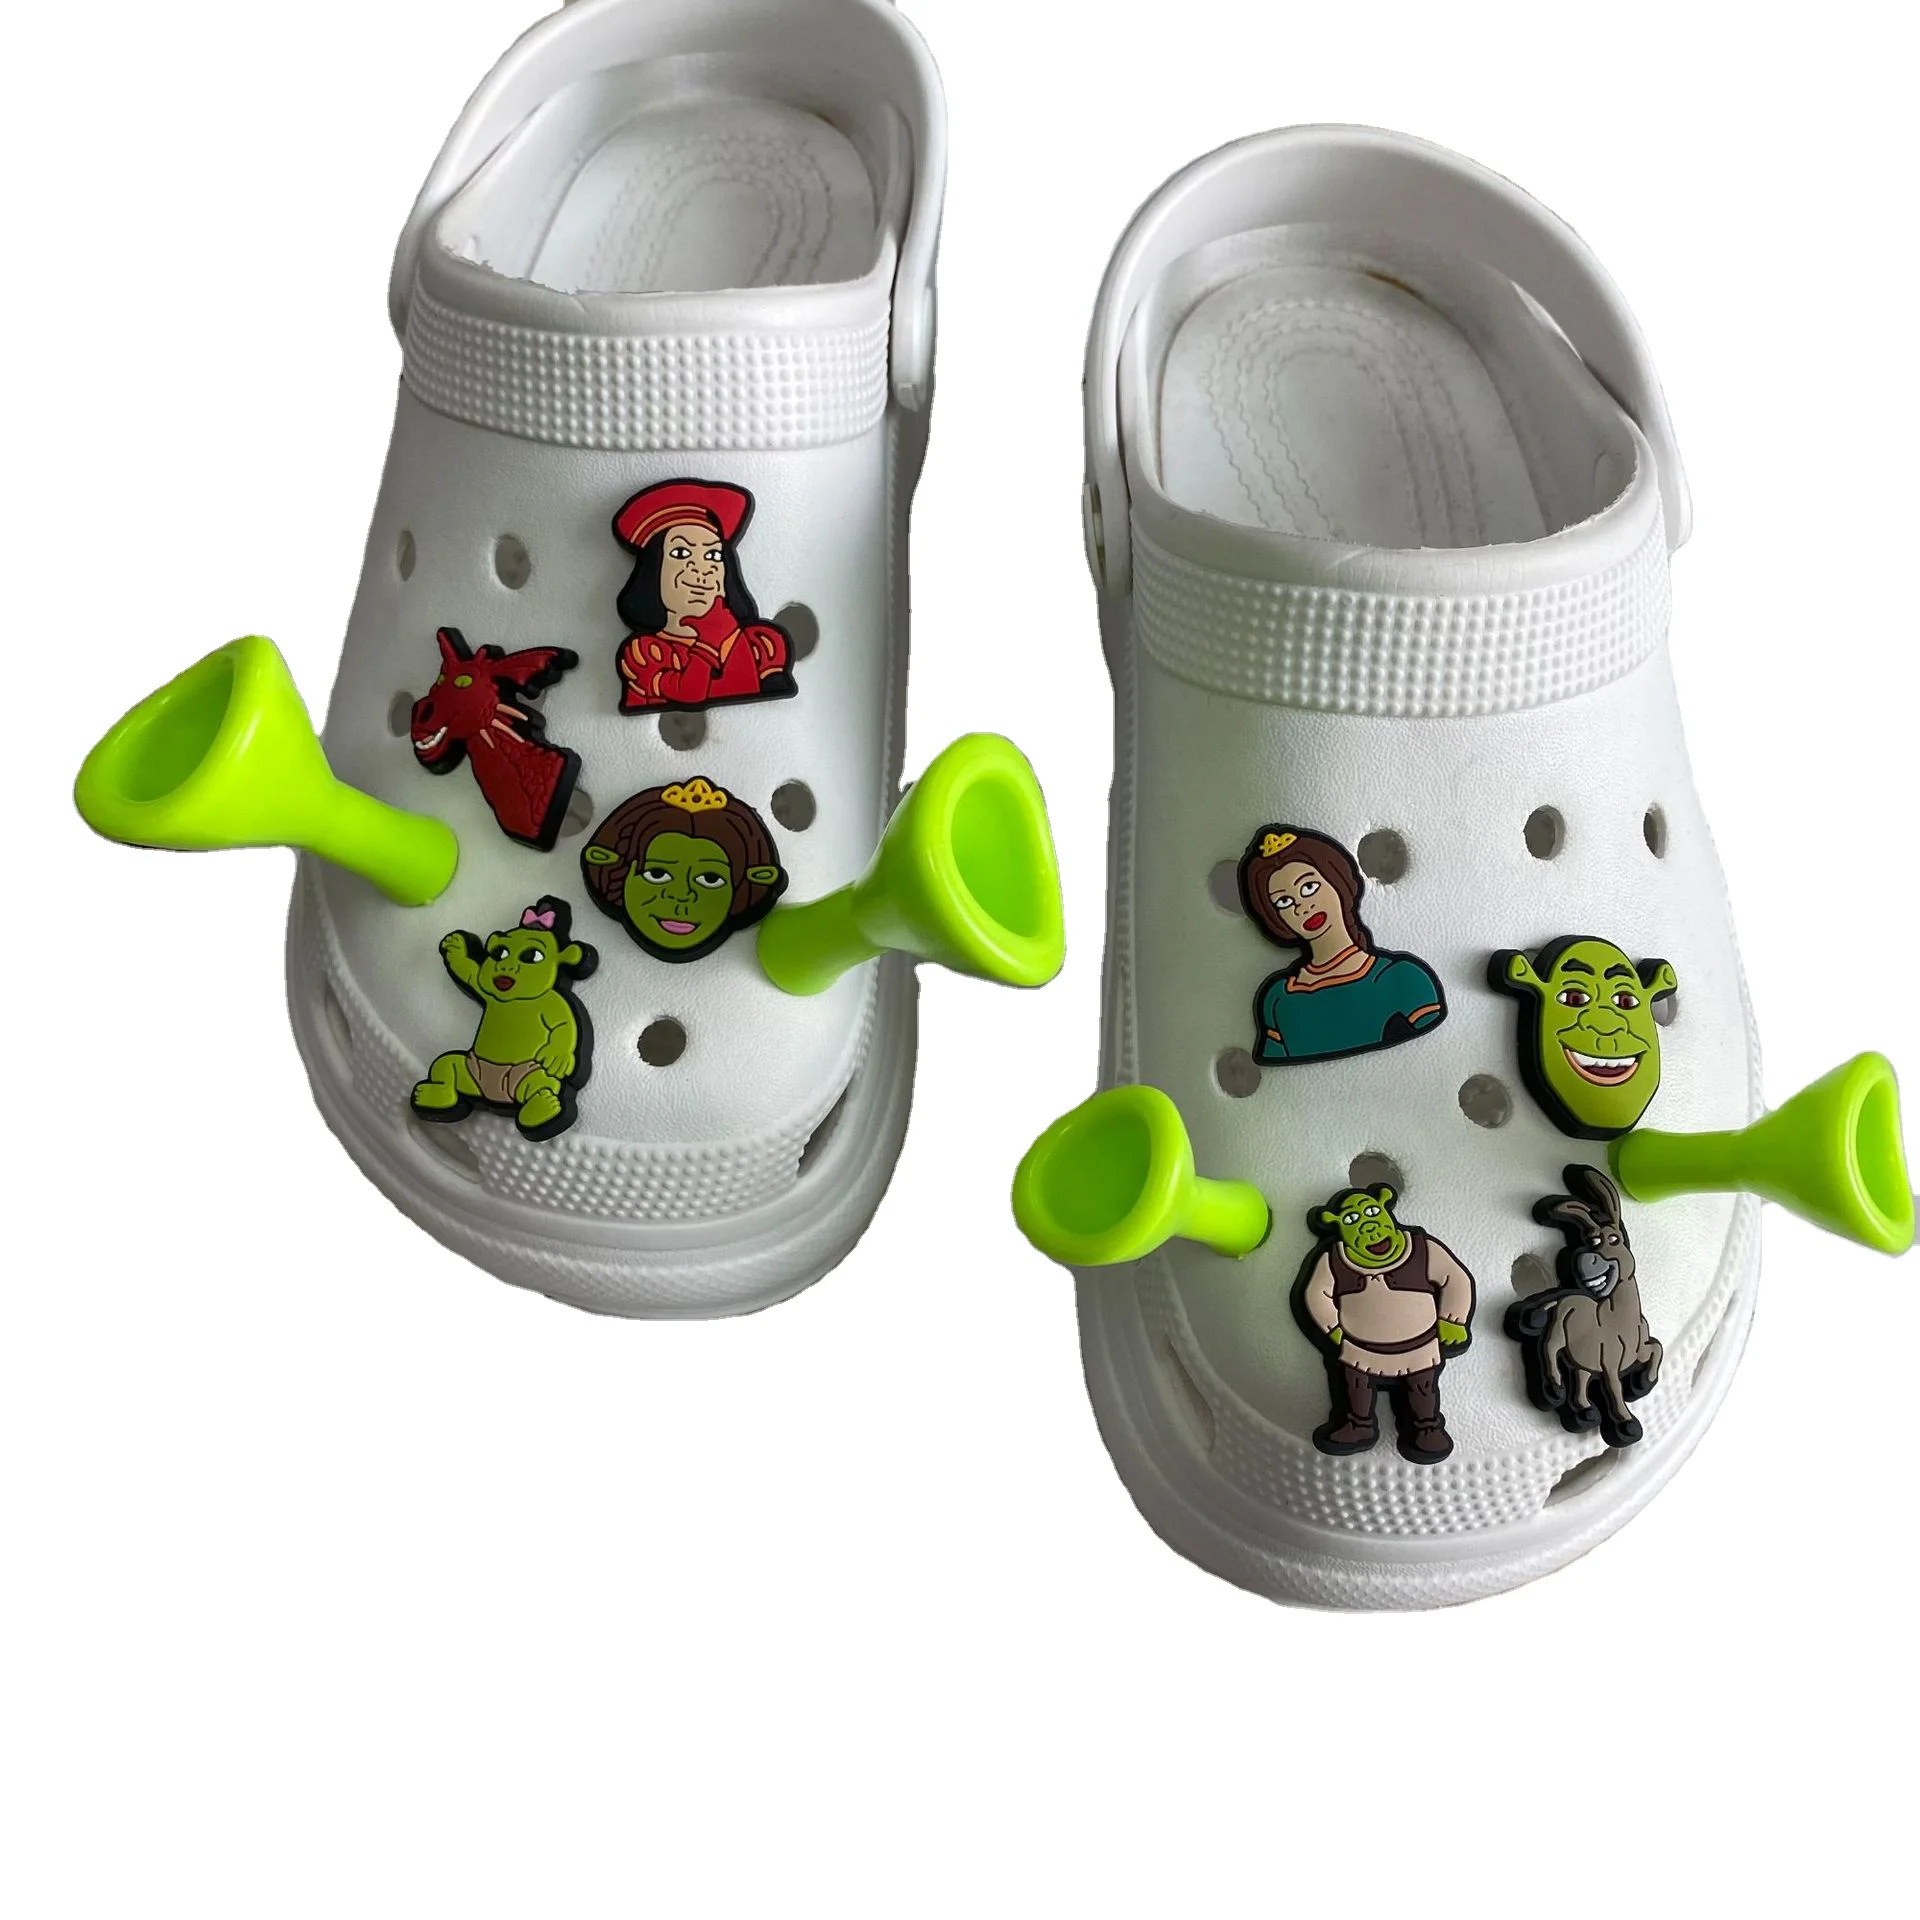 10PCS High Imitation PVC Shoe Charms Cartoon Shrek Croc Clogs